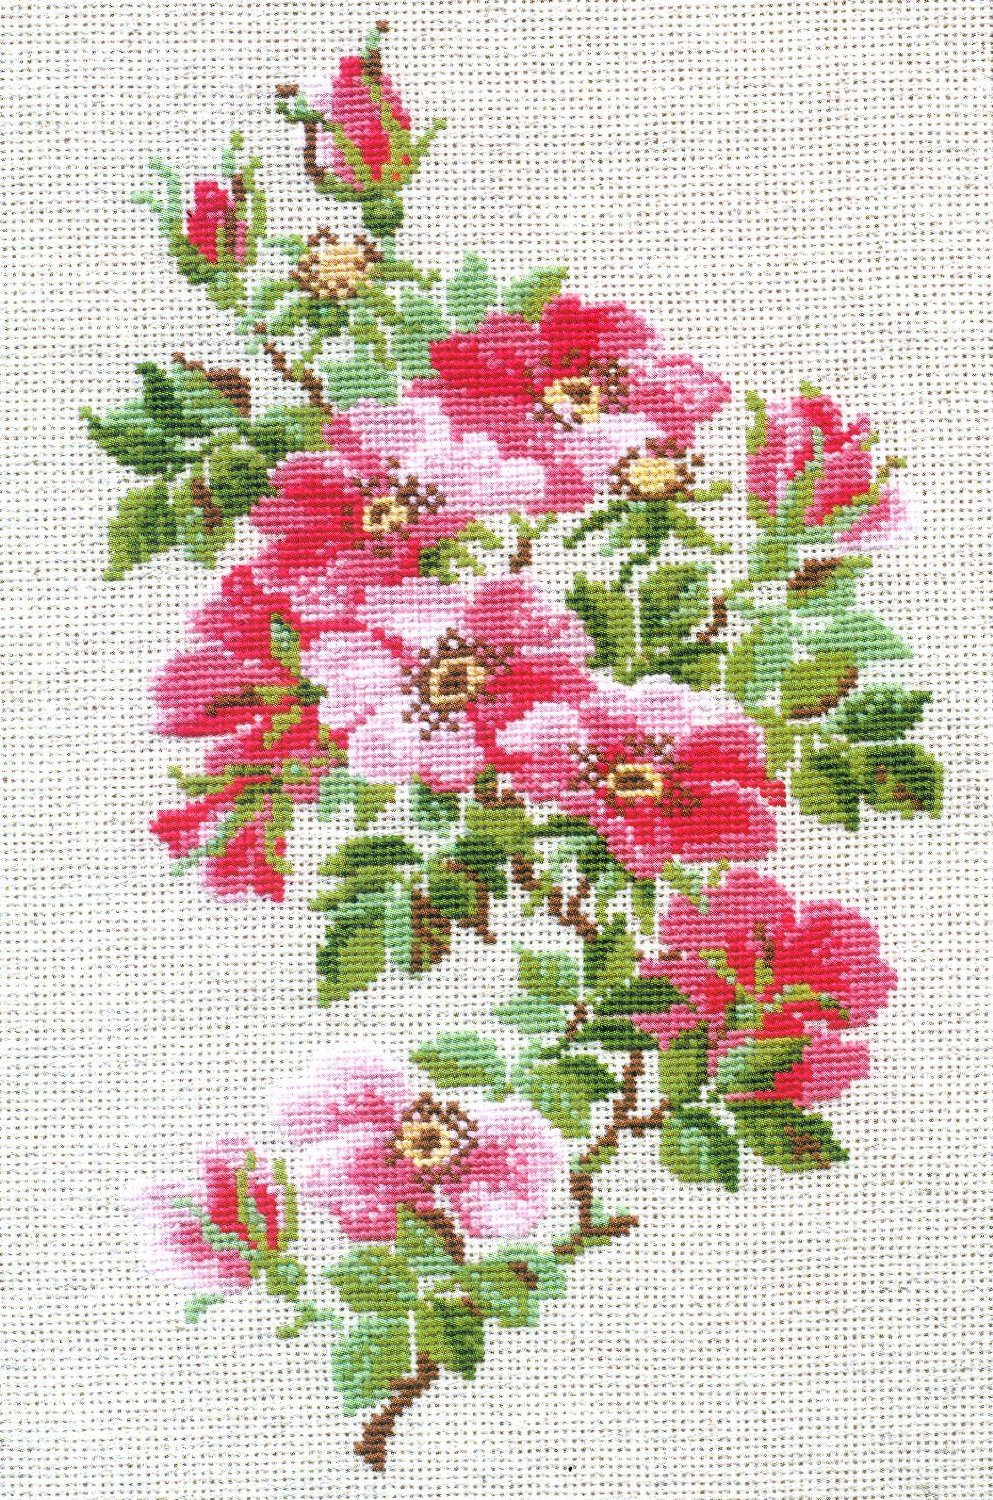 Horse. Free Cross Stitch Pattern | Better Cross Stitch - Free Printable Cross Stitch Patterns Flowers